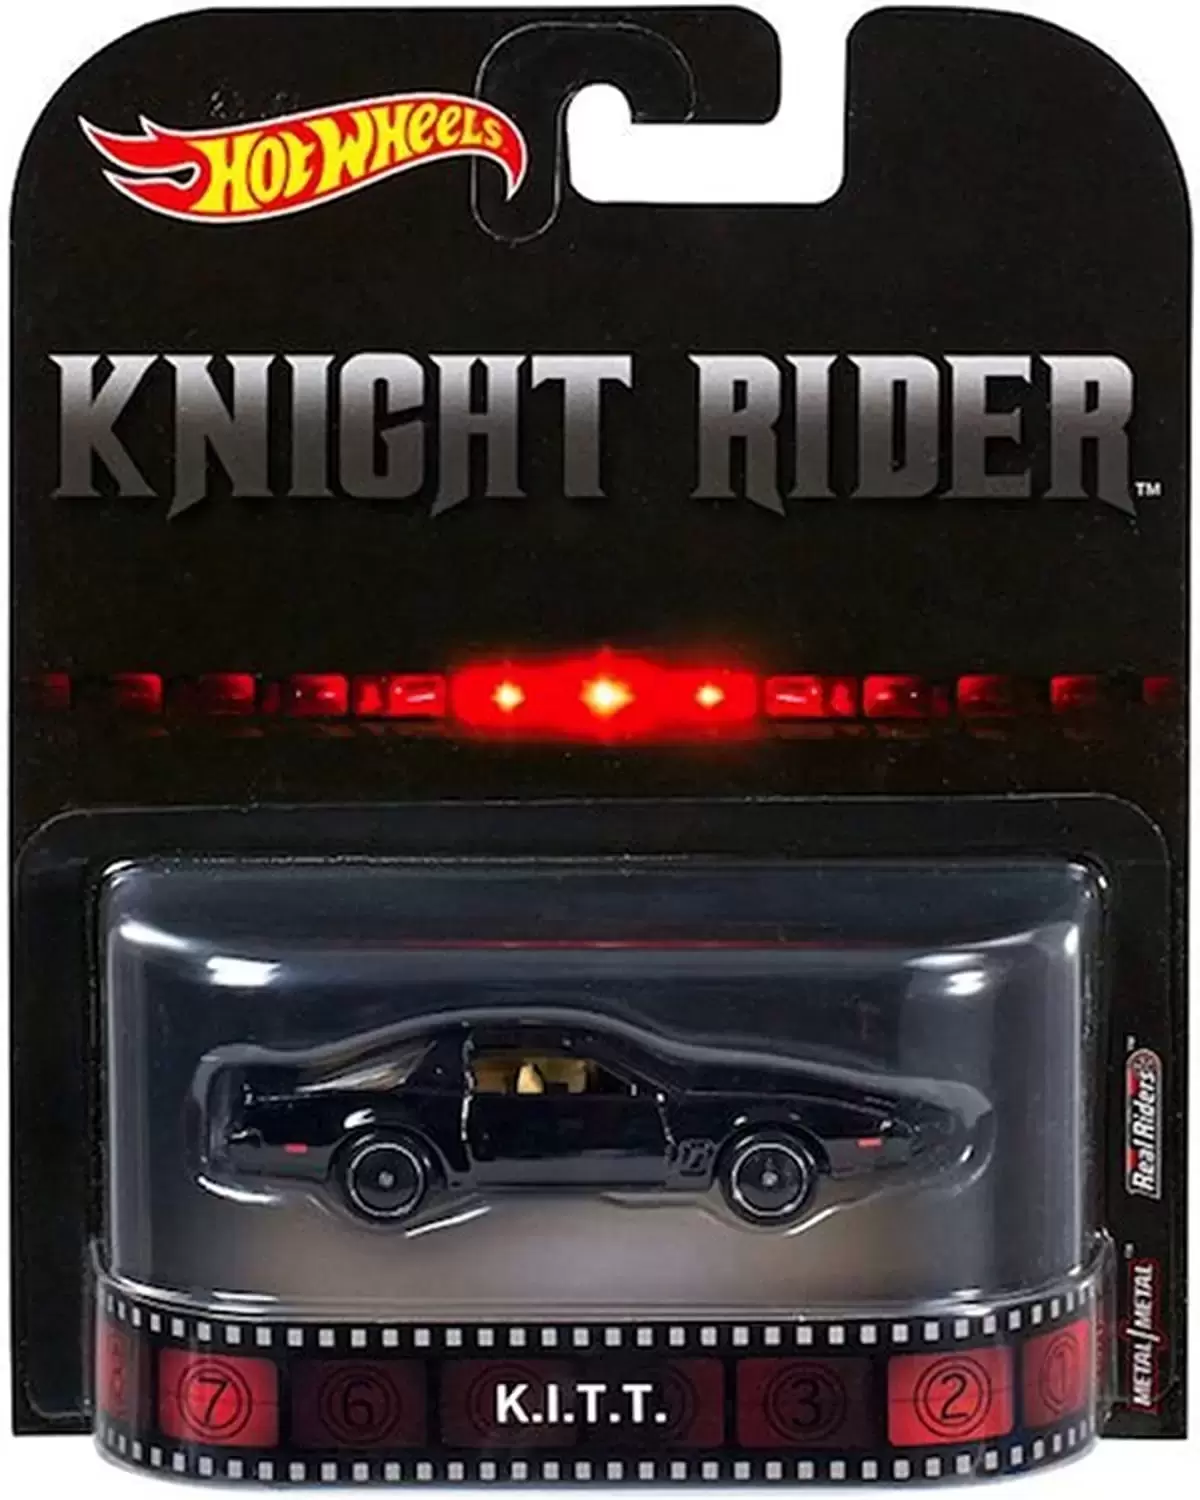 Retro Entertainment Hot Wheels - Knight Rider - K.I.T.T.